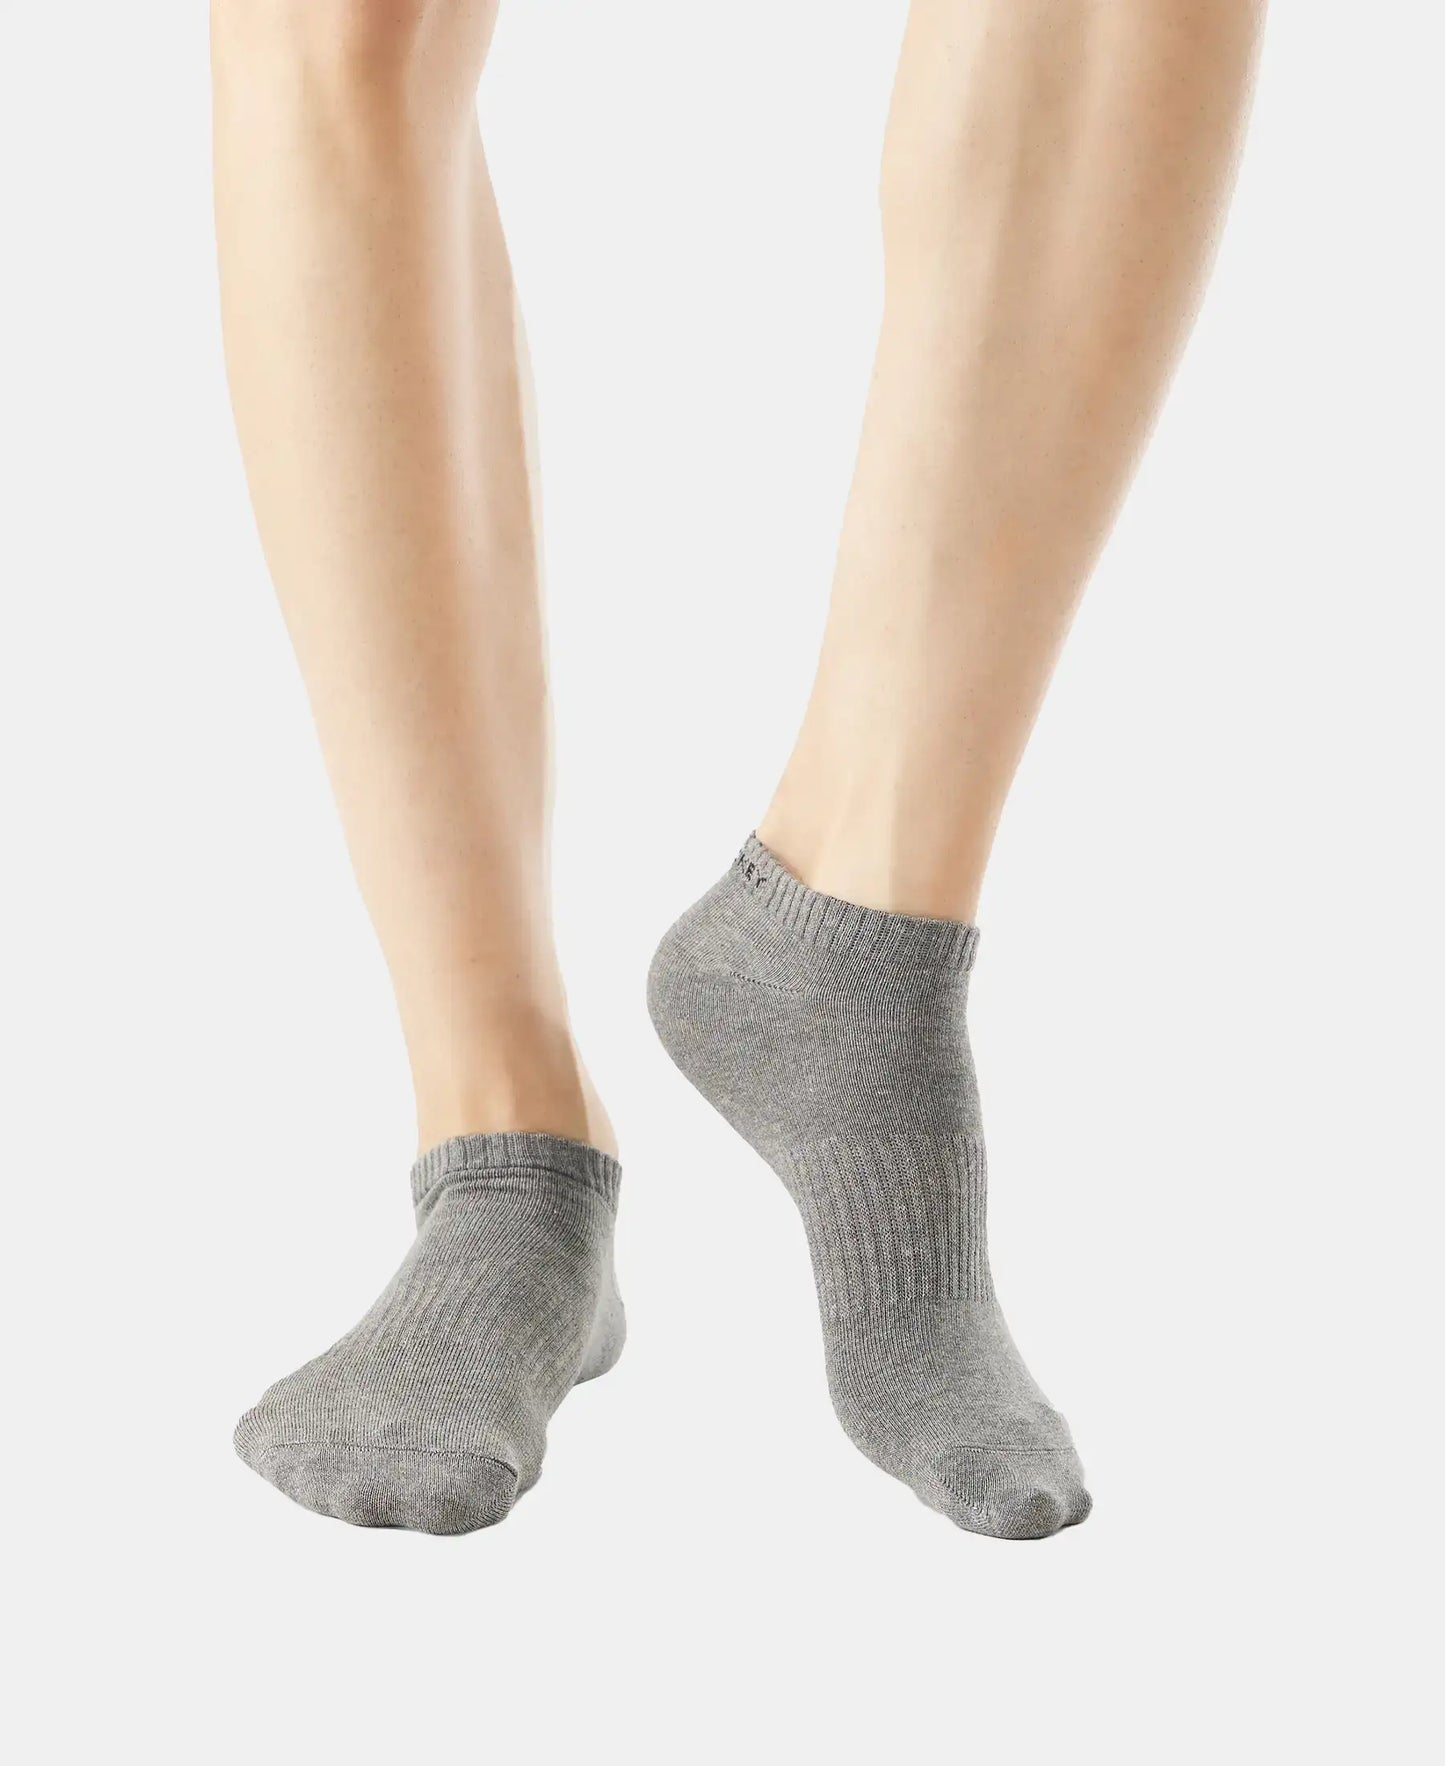 Compact Cotton Elastane Stretch Low Show Socks With StayFresh Treatment - Black/Grey Melange/Navy Melange (Pack of 3)